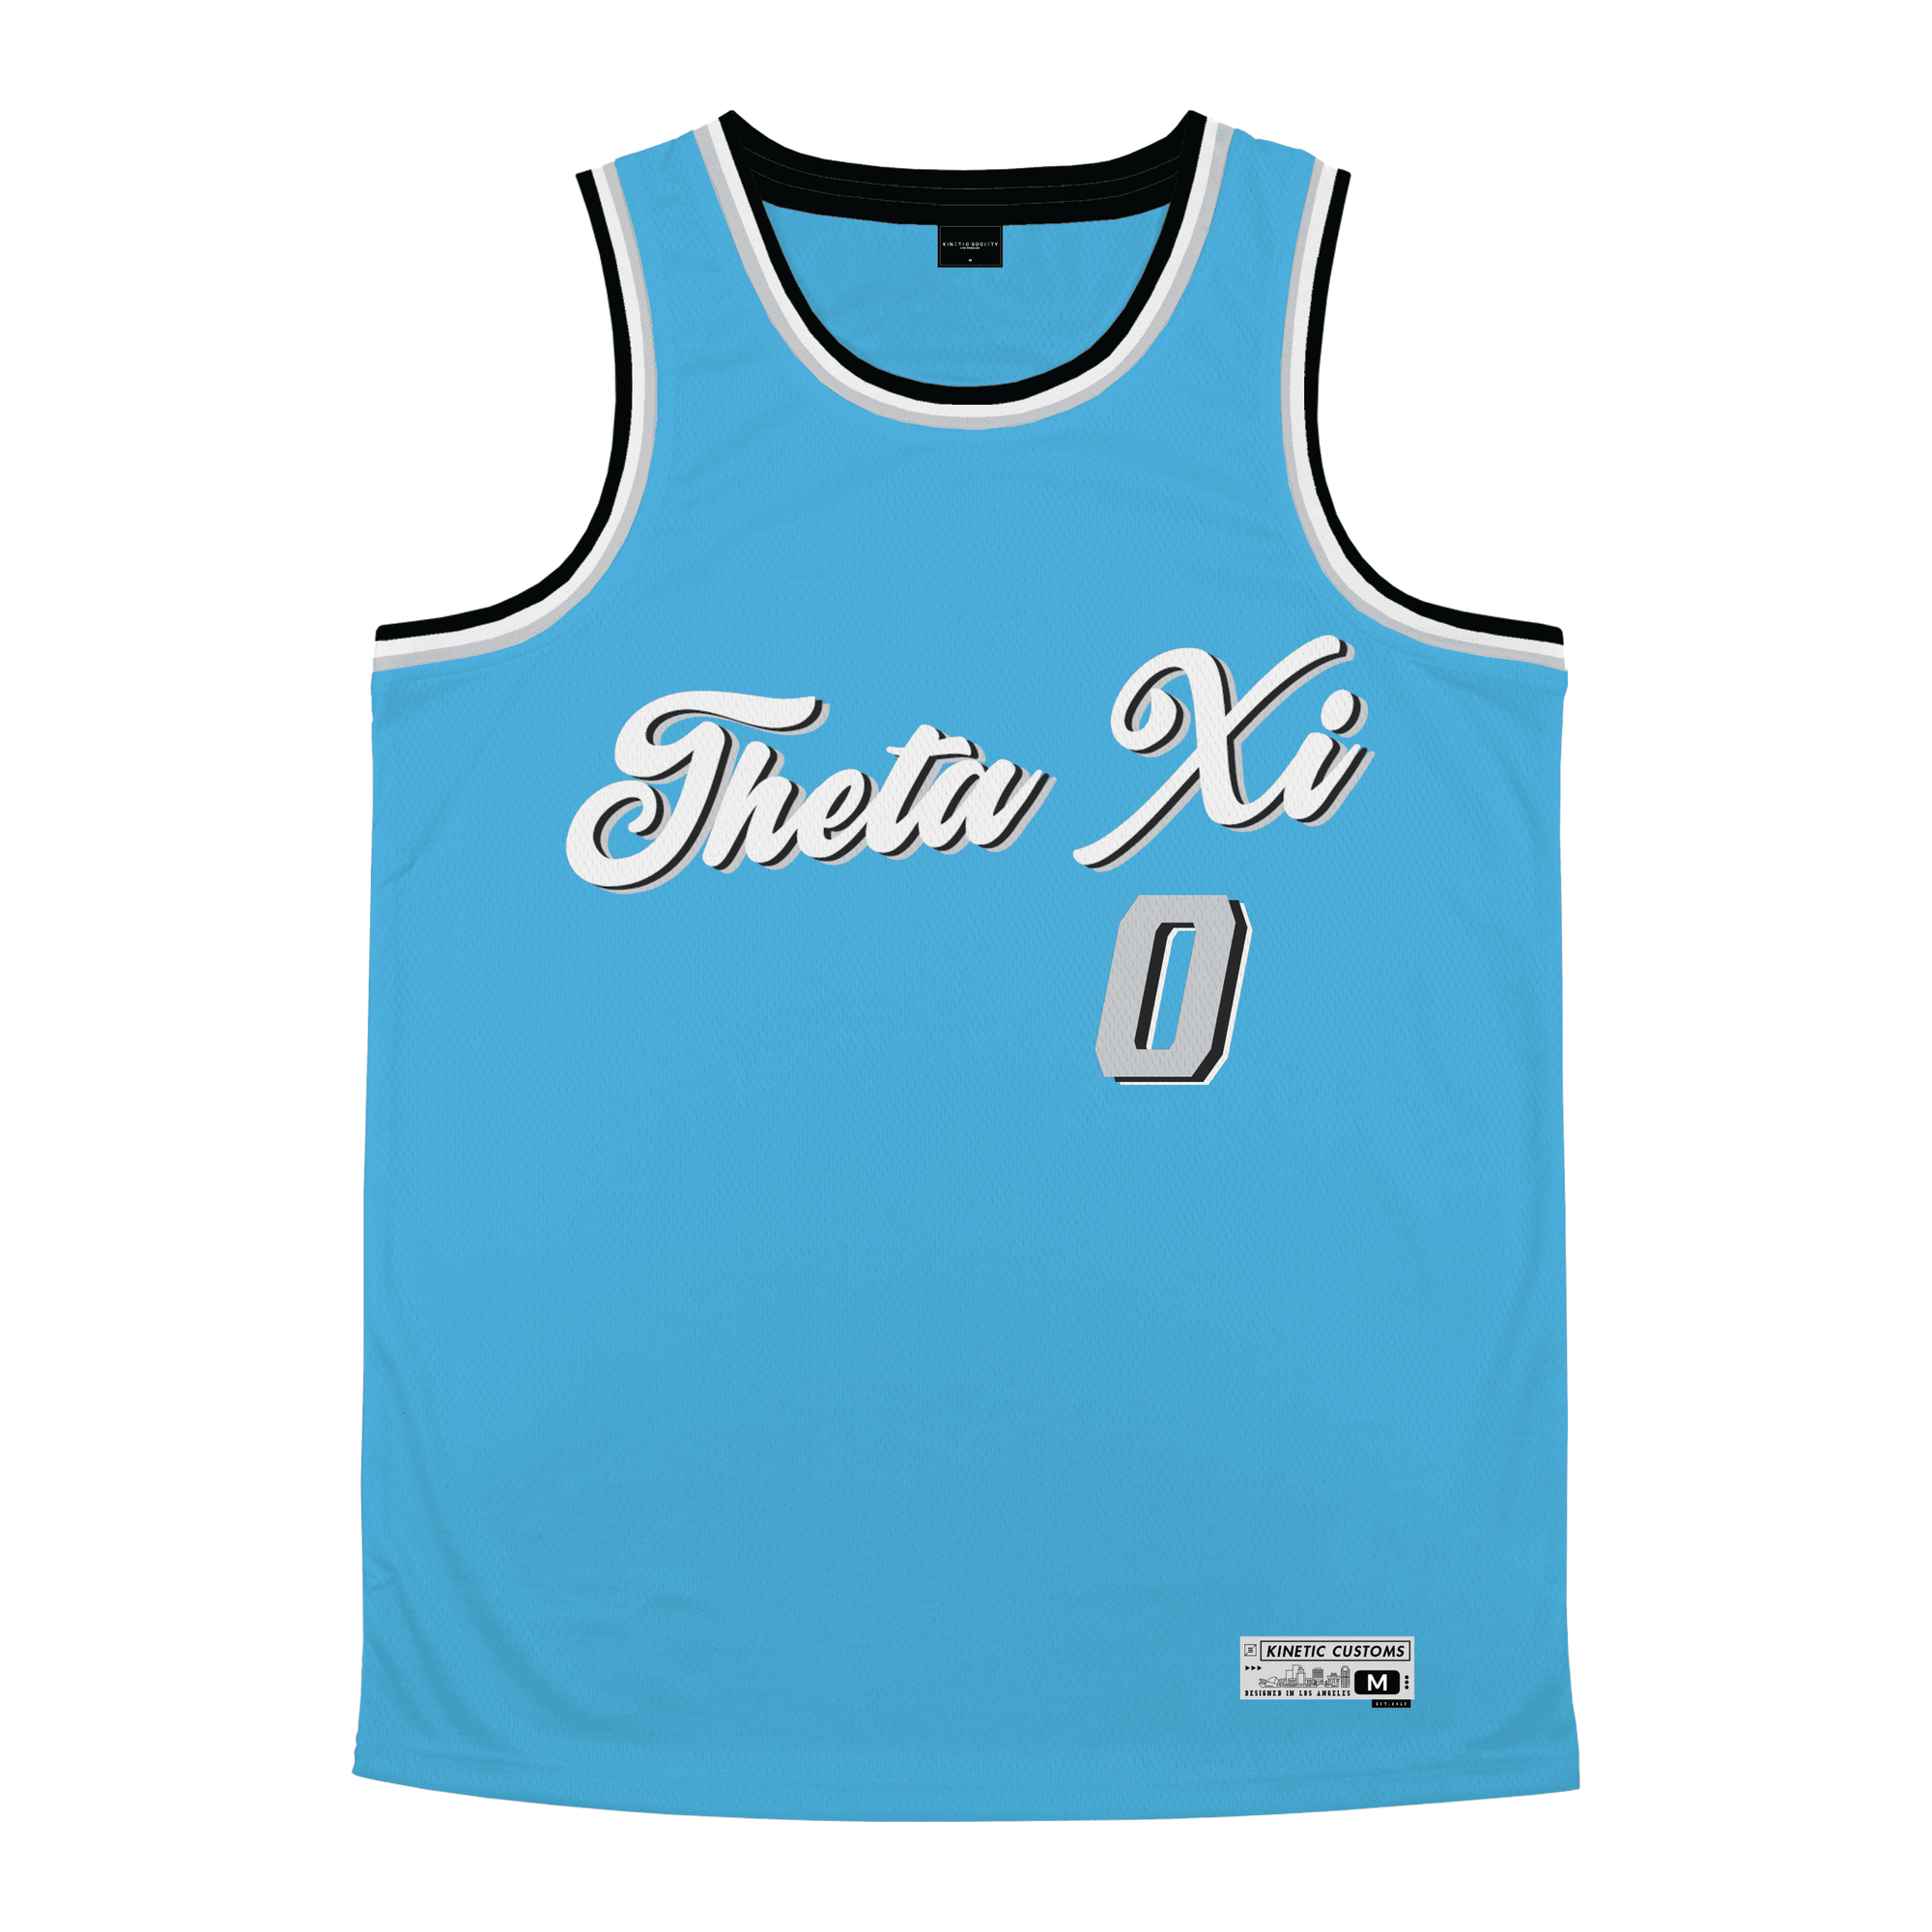 Theta Xi - Pacific Mist Basketball Jersey